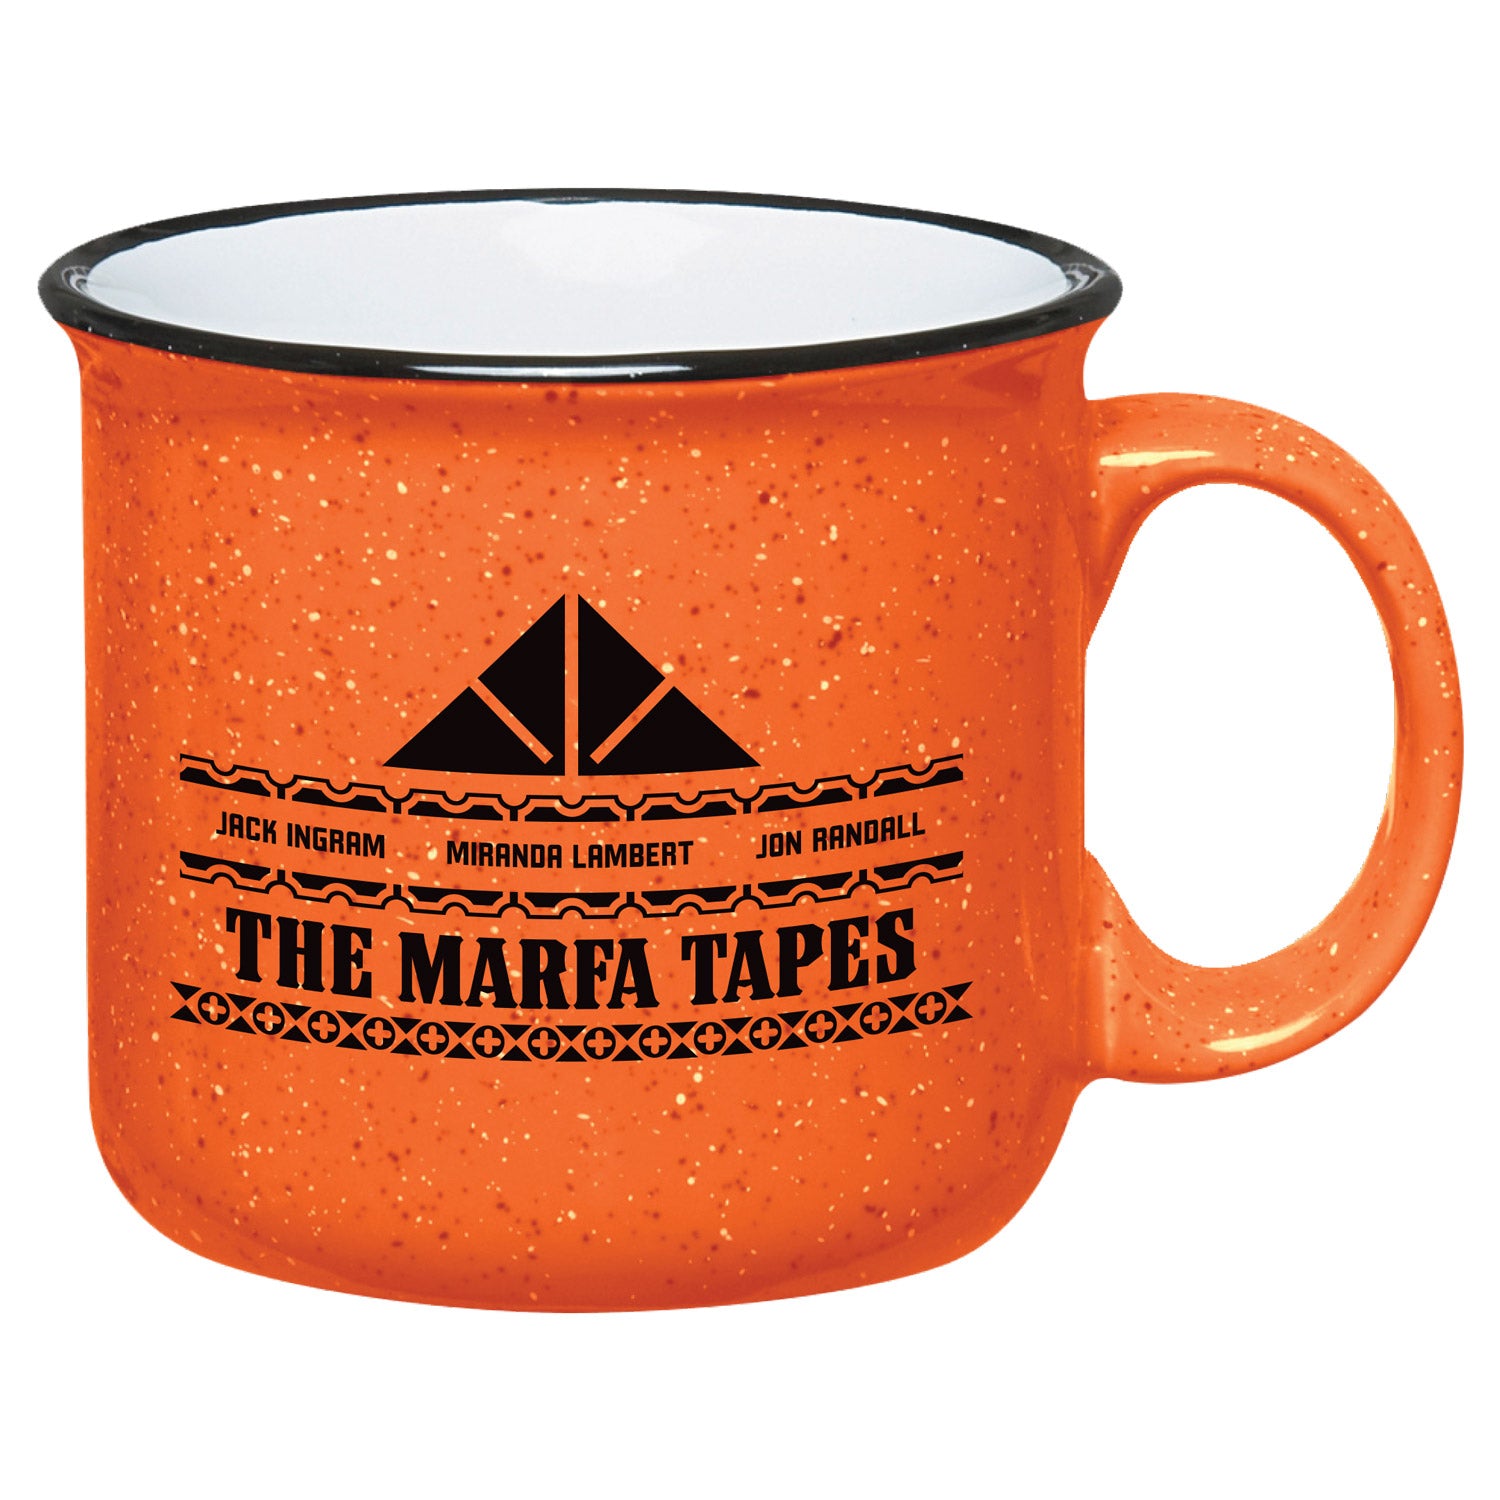 Mug front with "The Marfa Tapes. Jack Ingram, Miranda Lambert, Jon Randall."